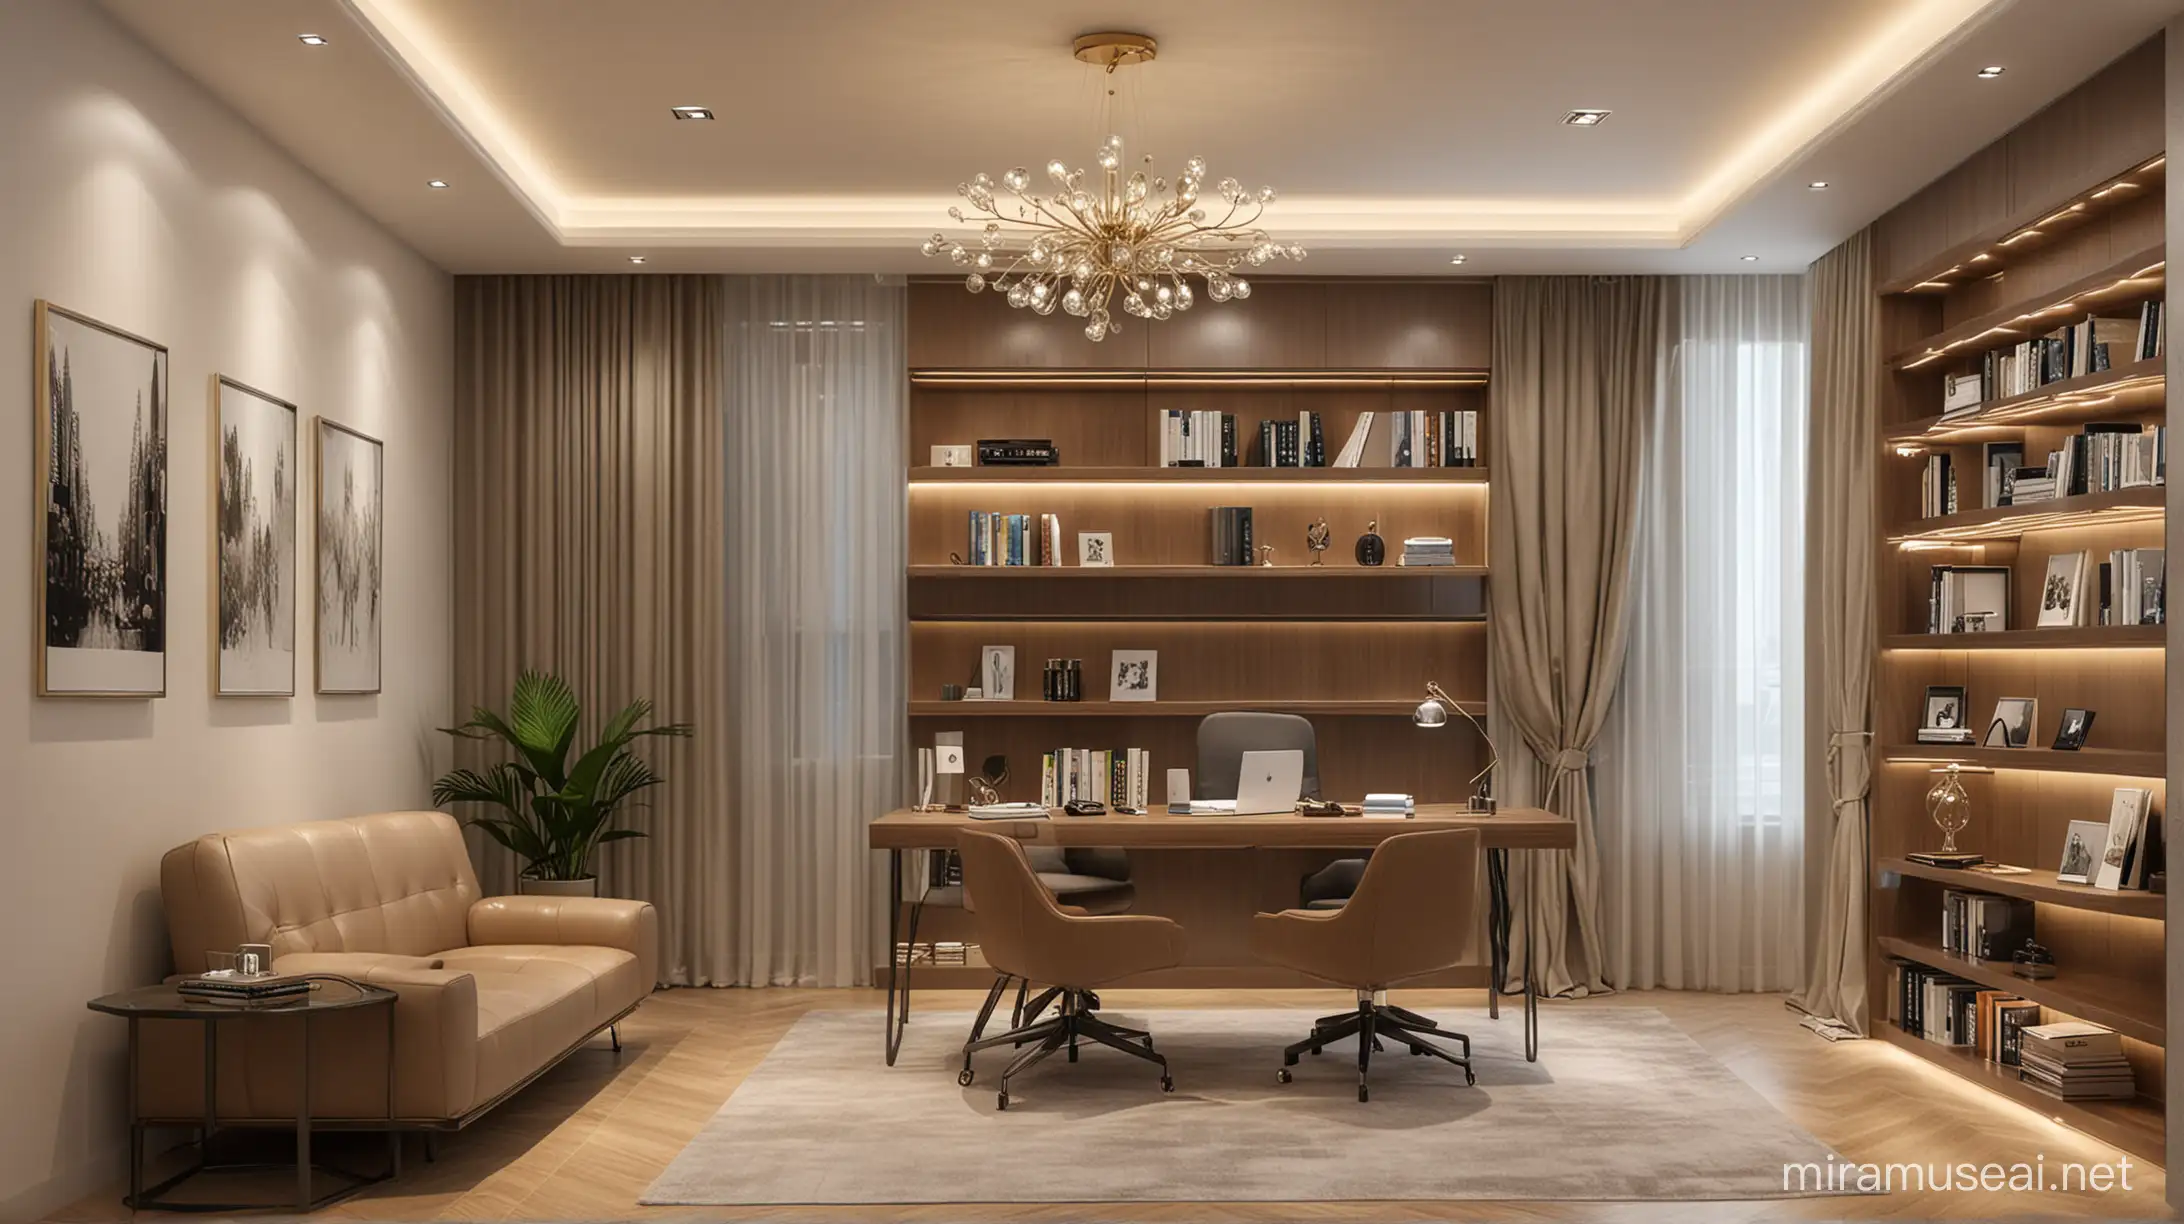 Luxurious Study Room Decor with Elegant Lighting